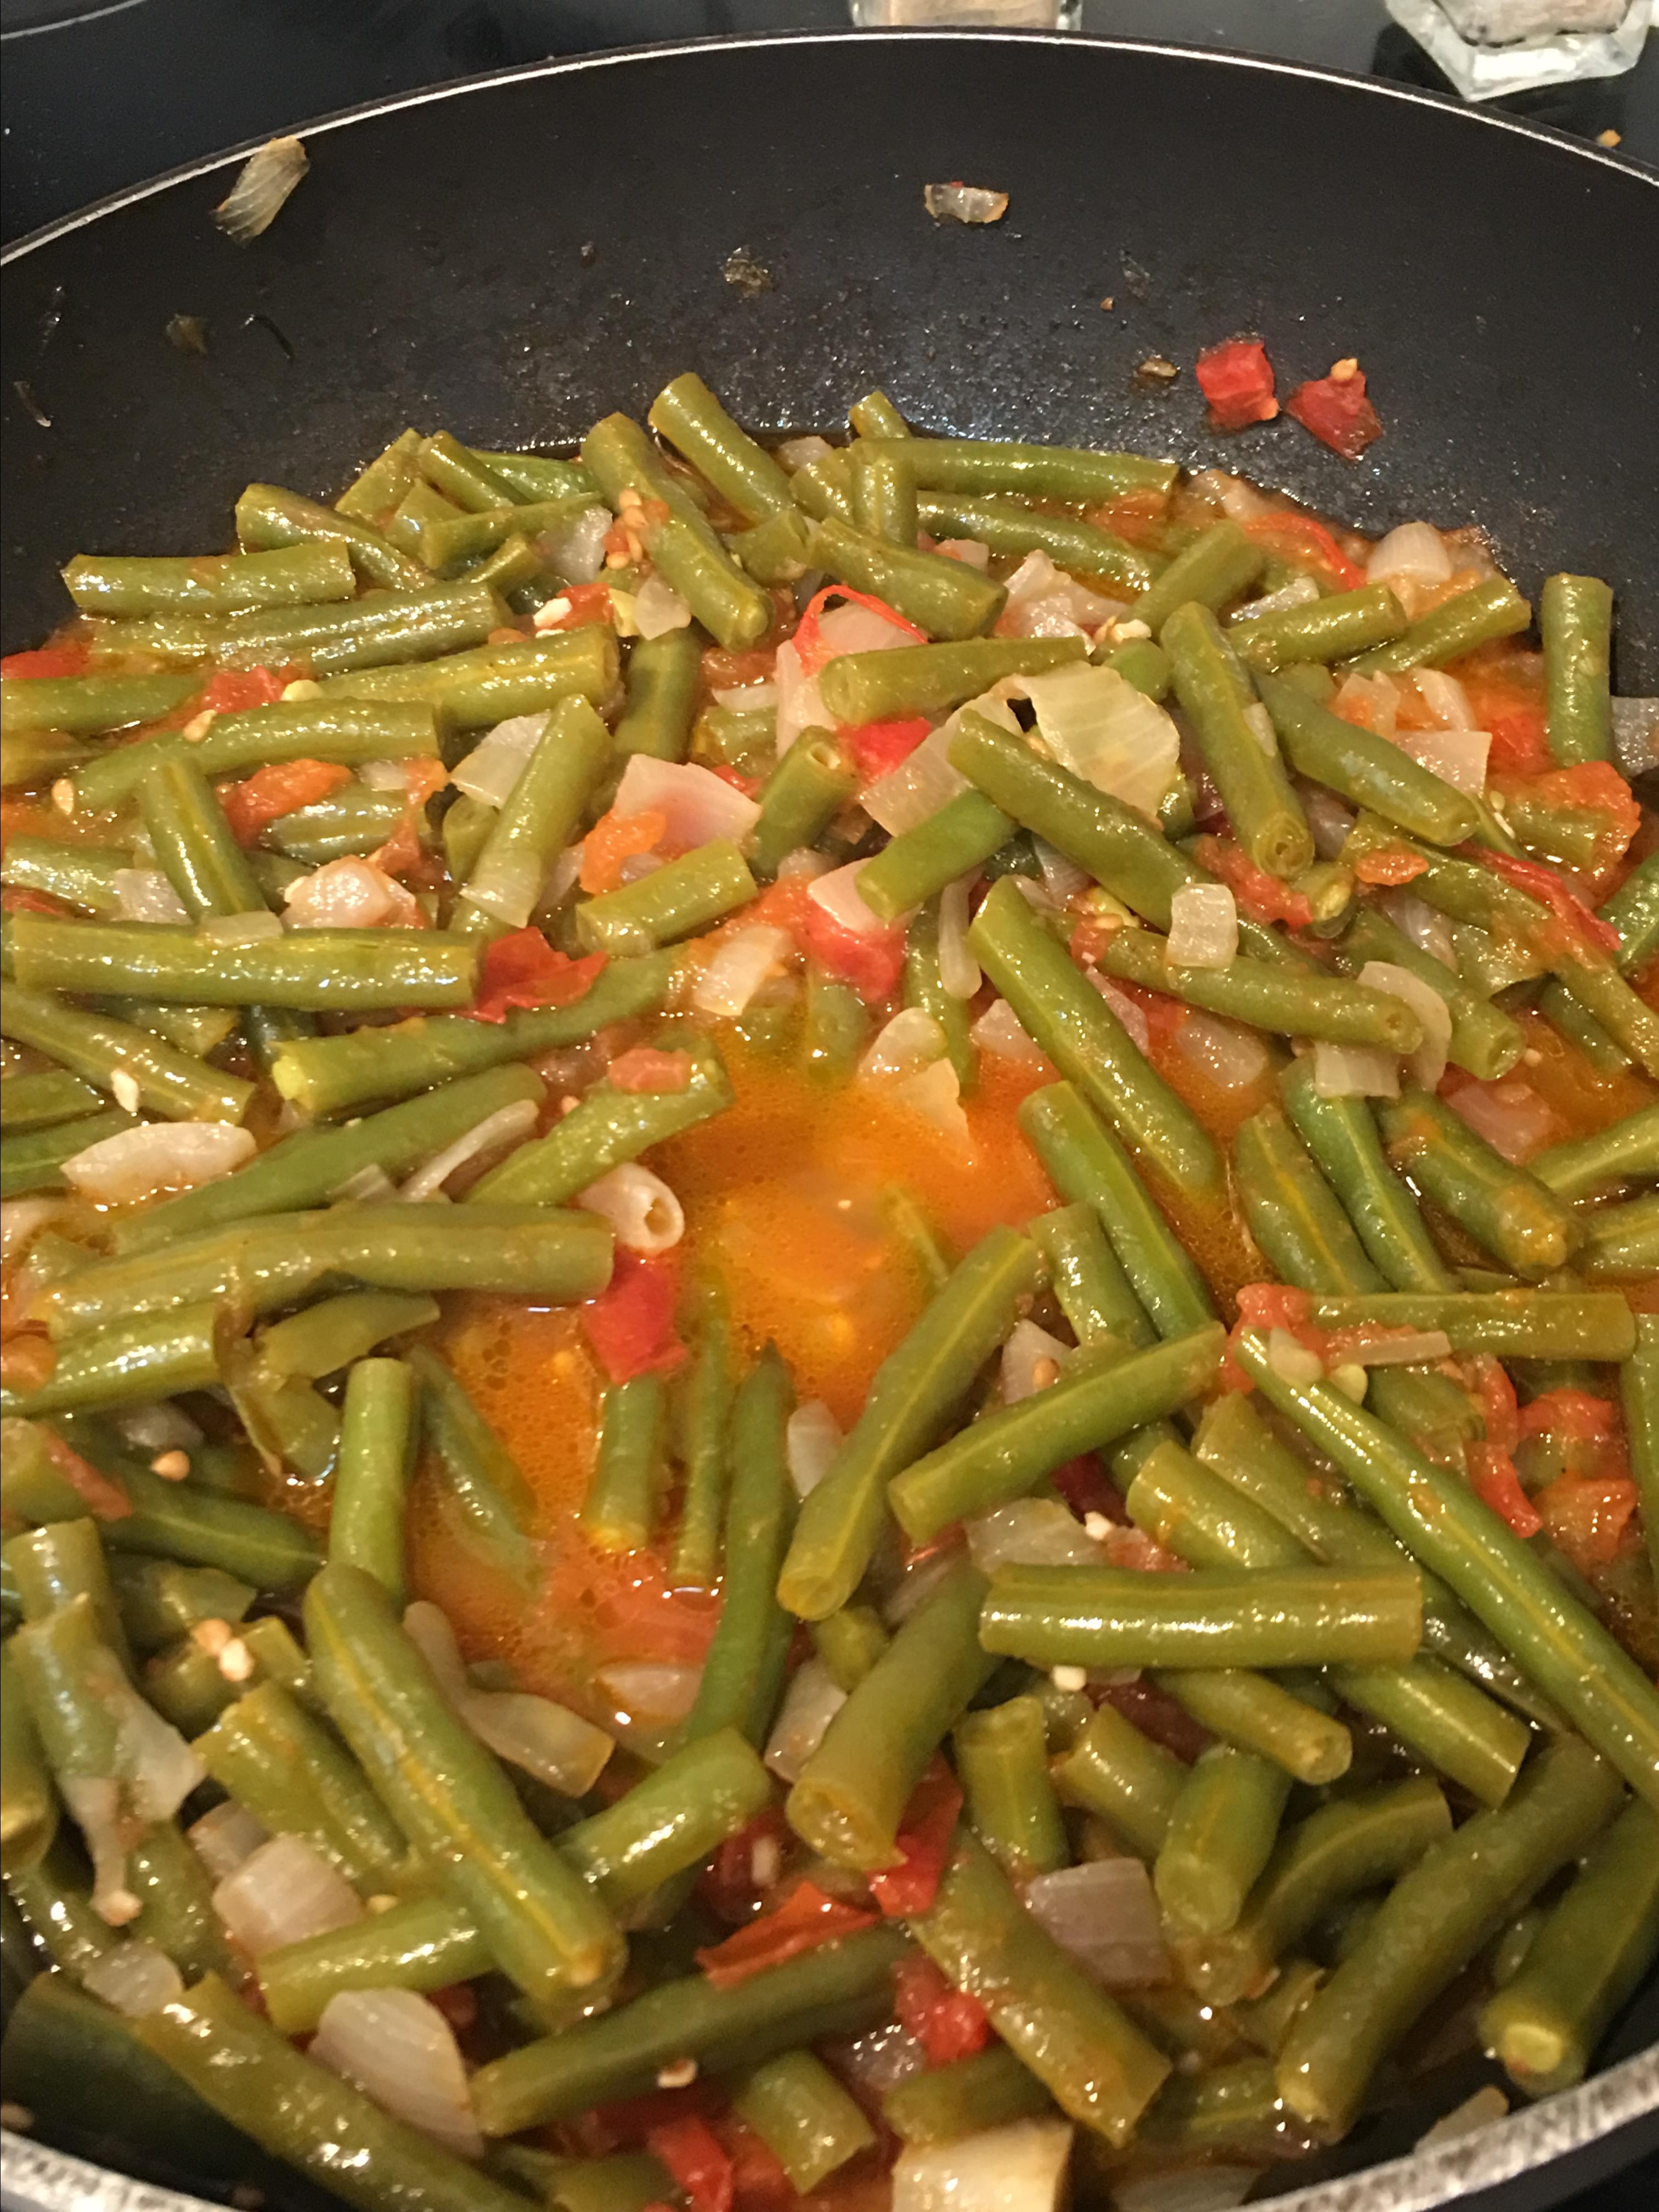 Greek Green Beans